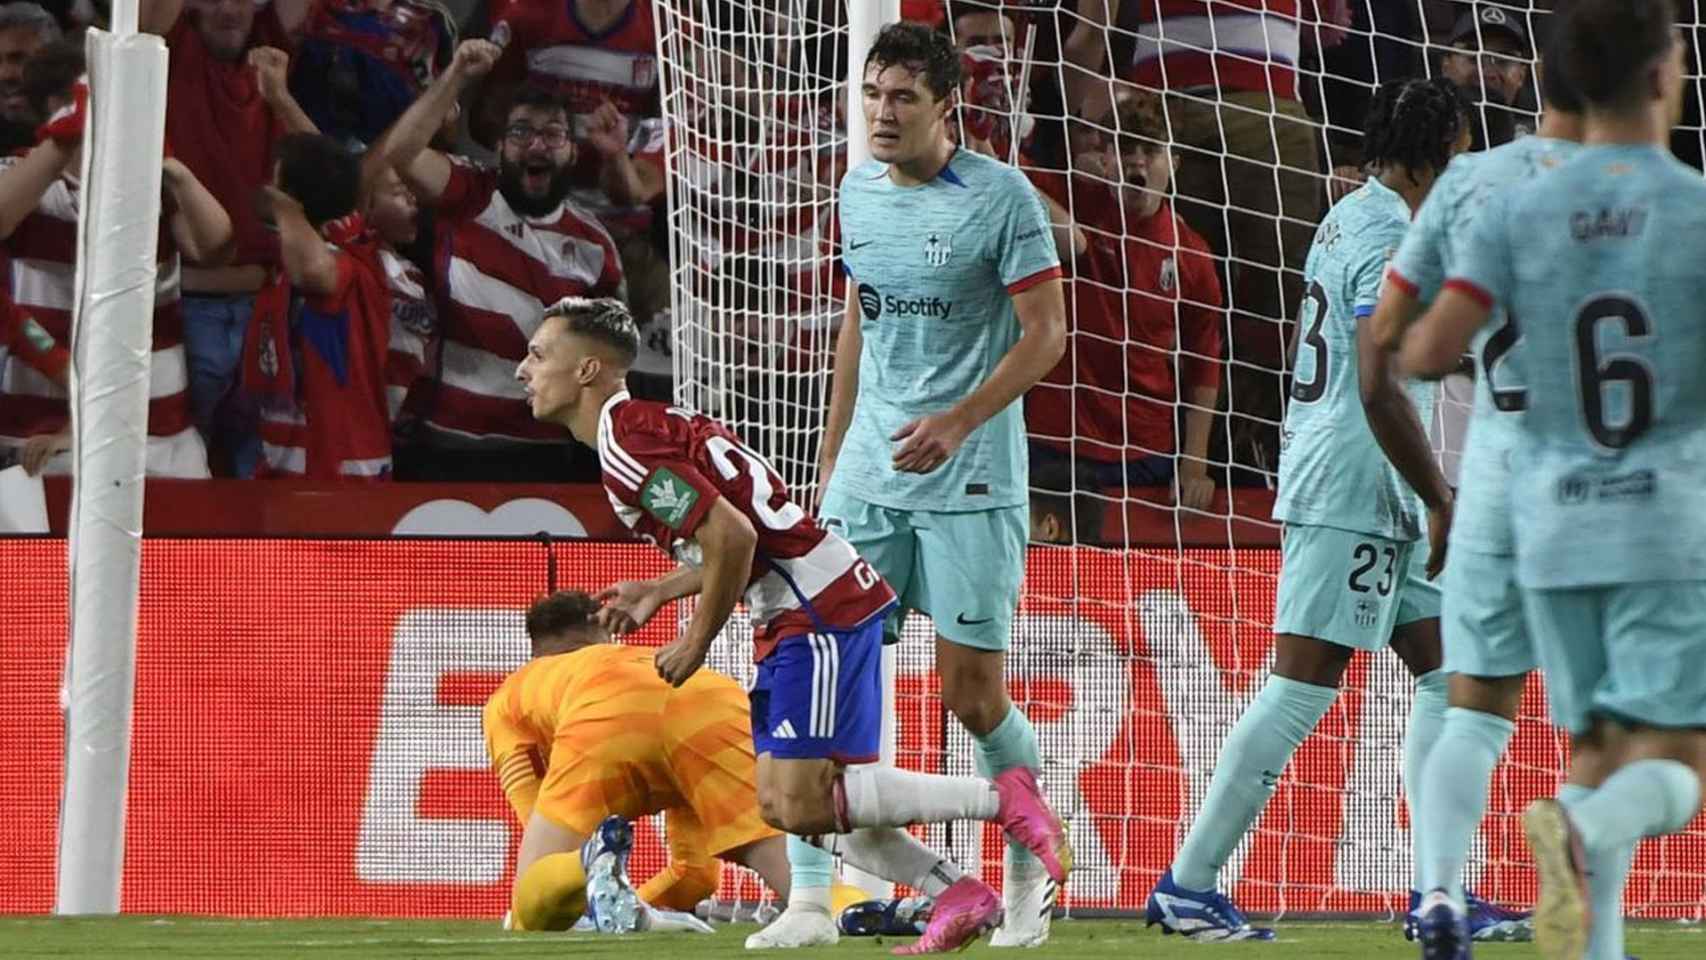 Bryan Zaragoza, verdugo del Barça, festeja un gol contra Ter Stegen en la Liga